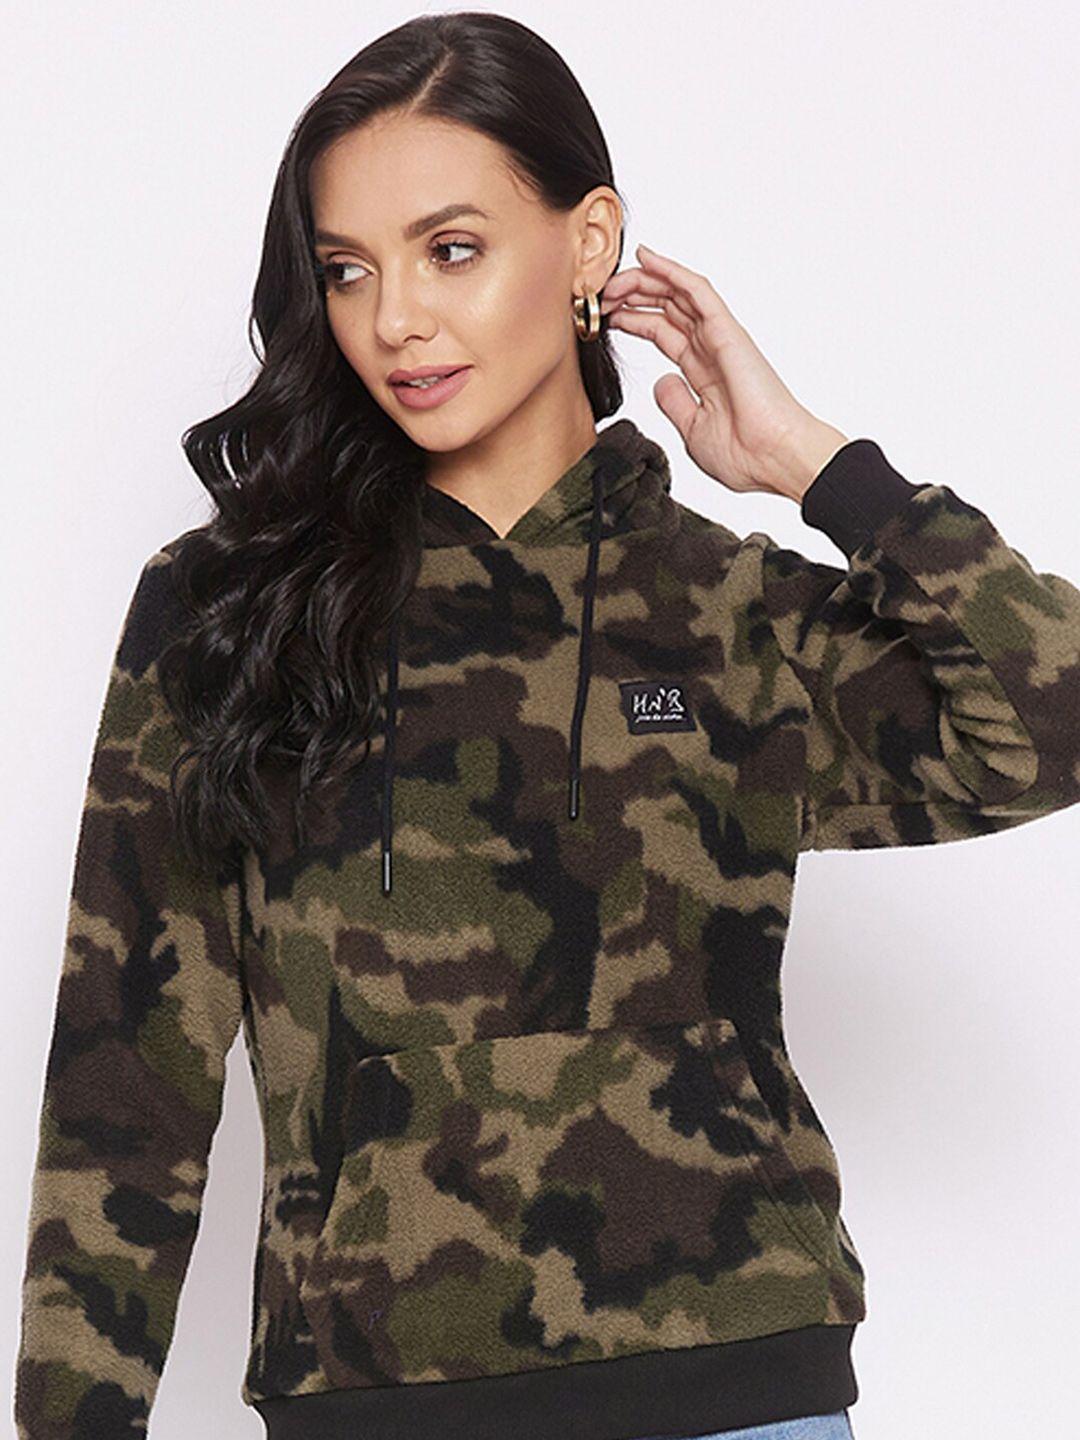 harbor-n-bay-camouflage-printed-hooded-fleece-sweatshirt